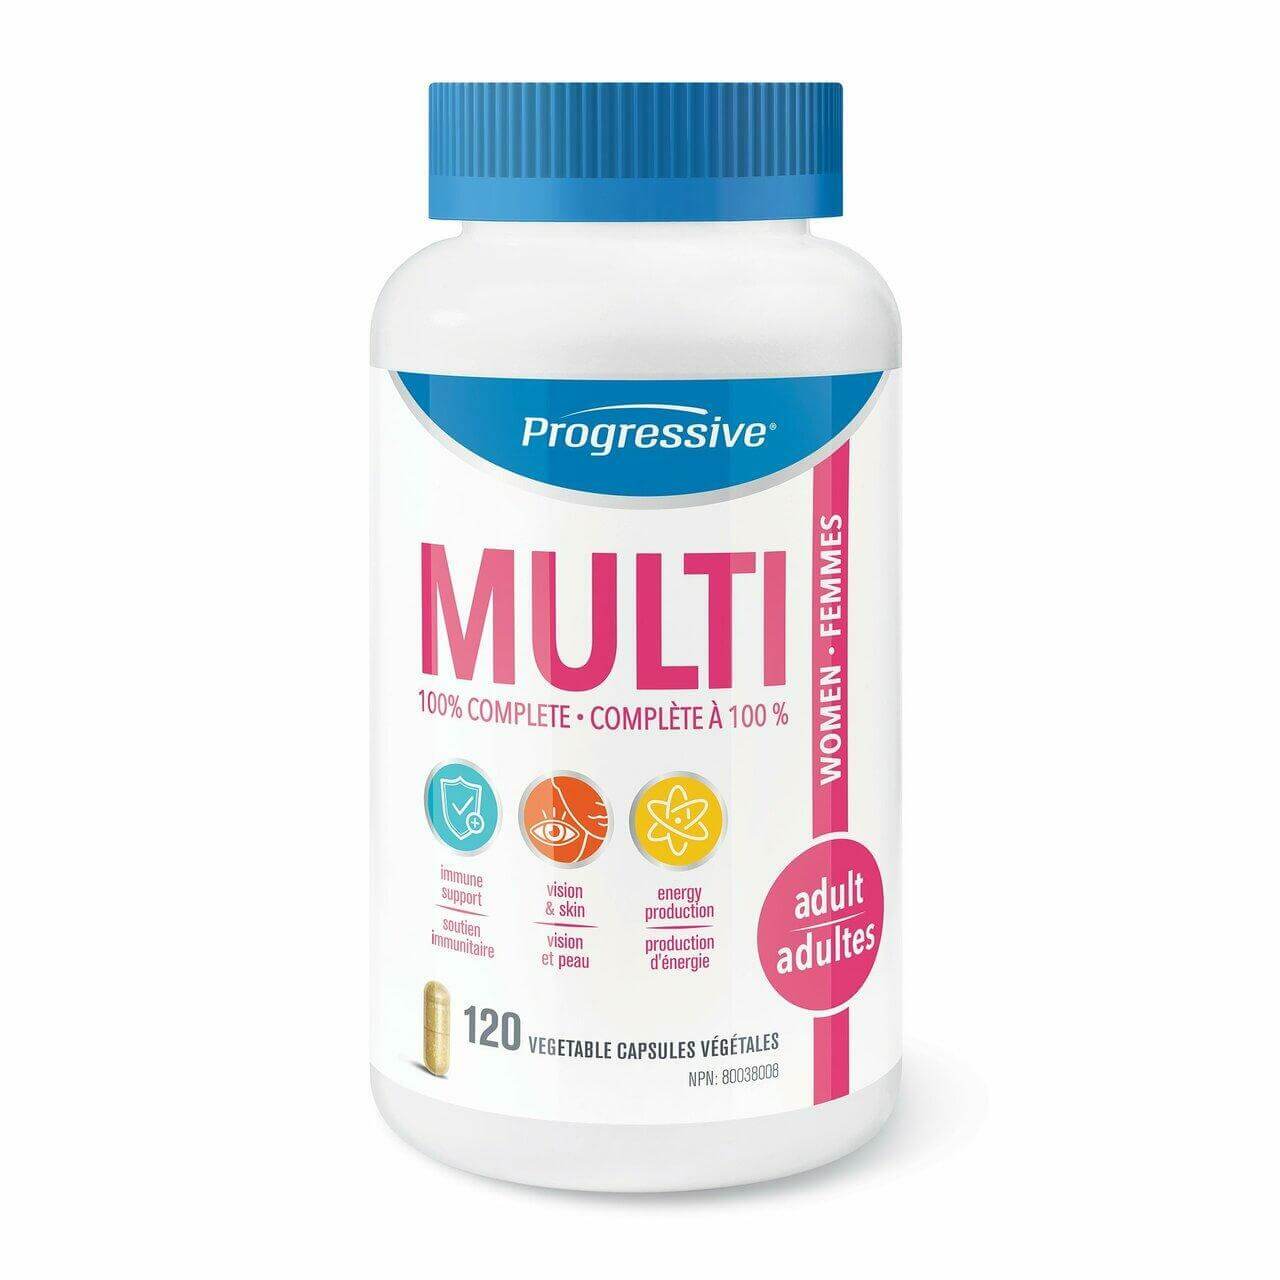 Progressive Multivitamins for Adult Women 120 Veg Capsules - Nutrition Plus